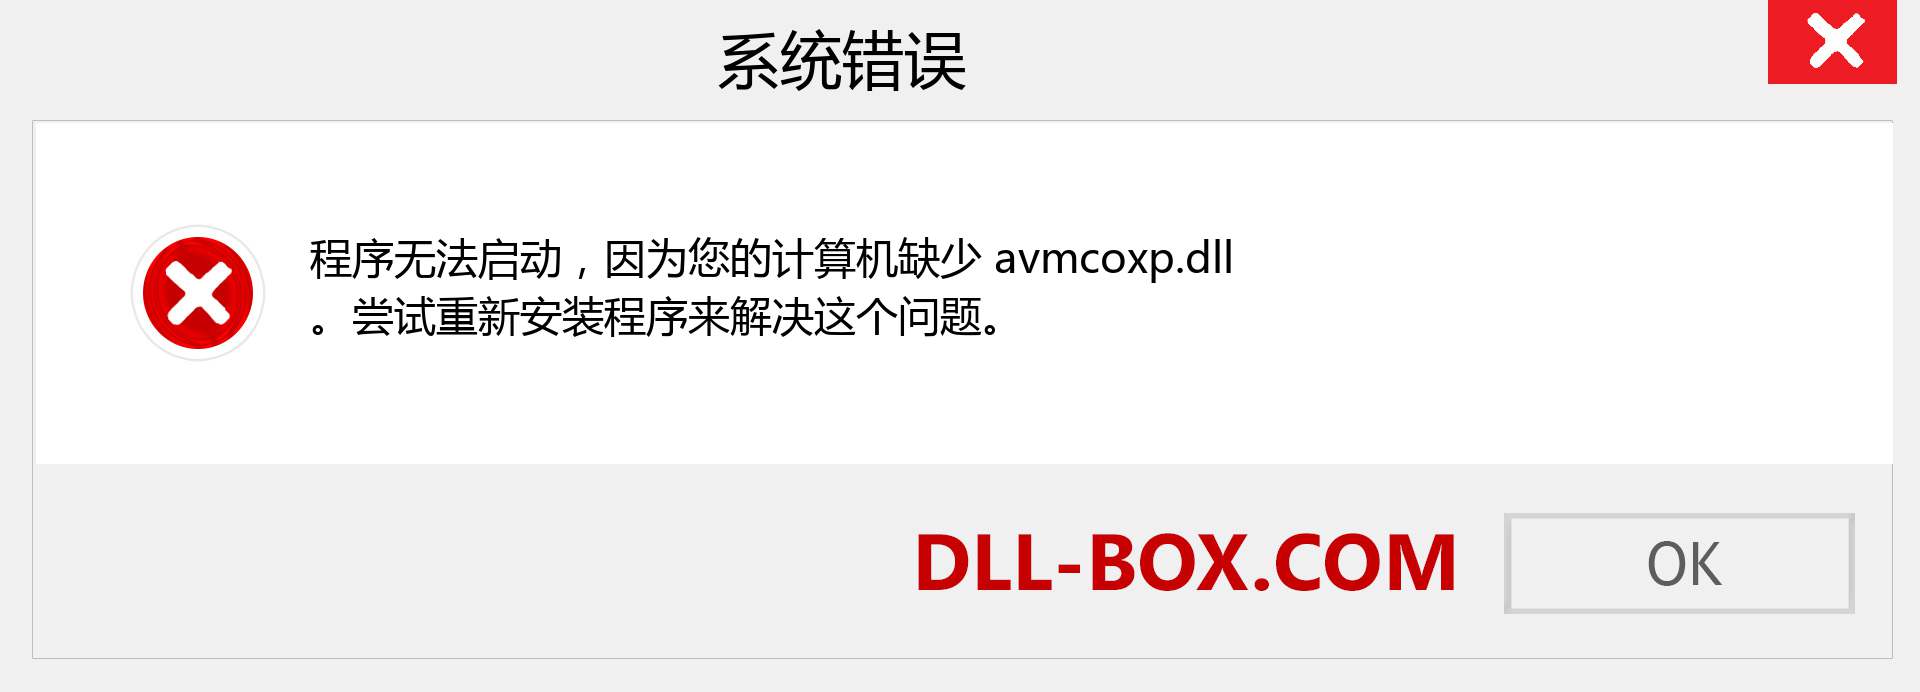 avmcoxp.dll 文件丢失？。 适用于 Windows 7、8、10 的下载 - 修复 Windows、照片、图像上的 avmcoxp dll 丢失错误